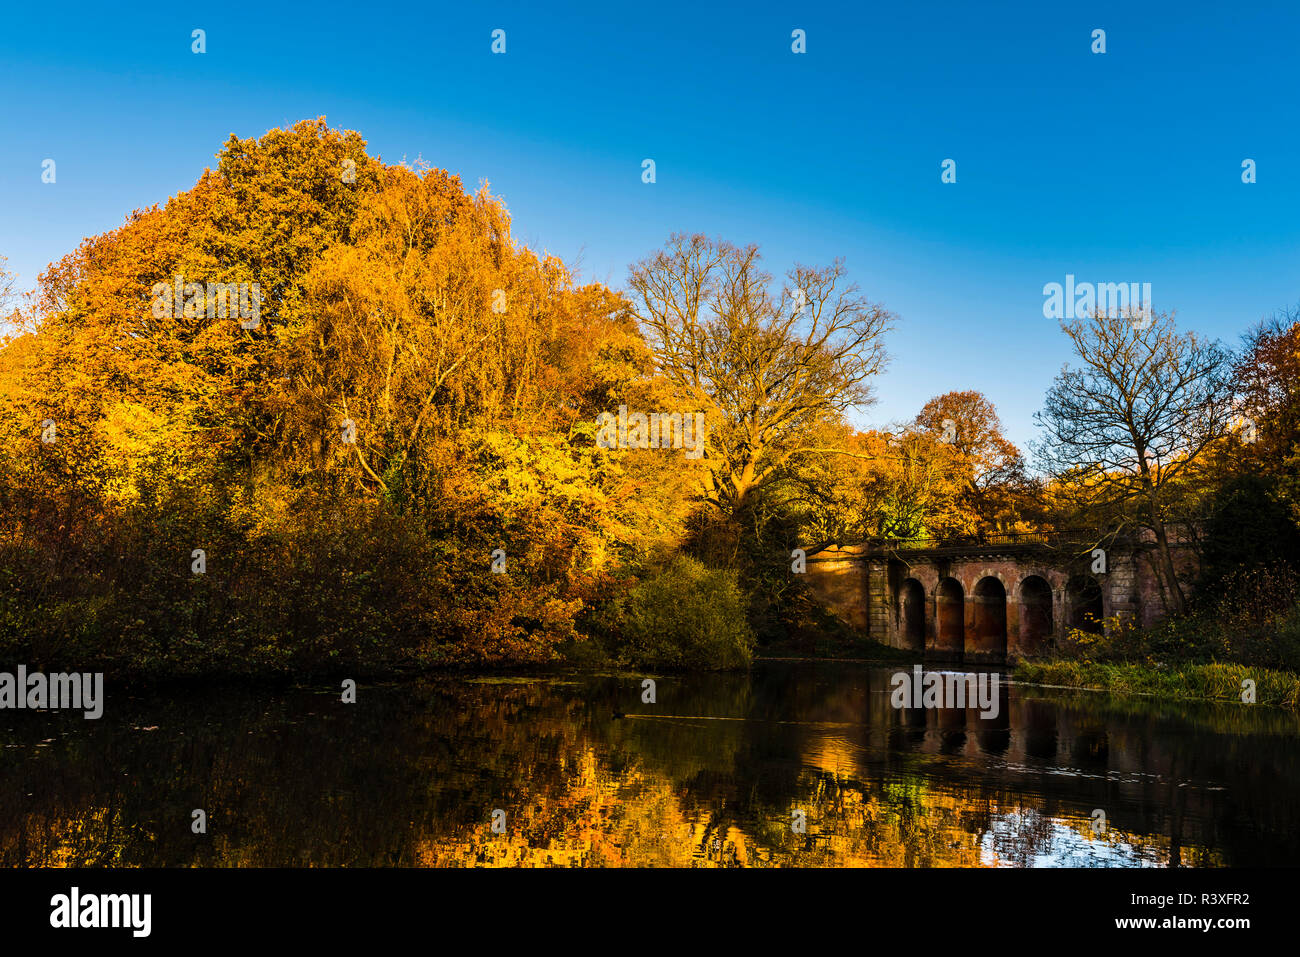 Autumn reflections on the Viaduct pond at Hampstead Heath, London, UK Stock Photo